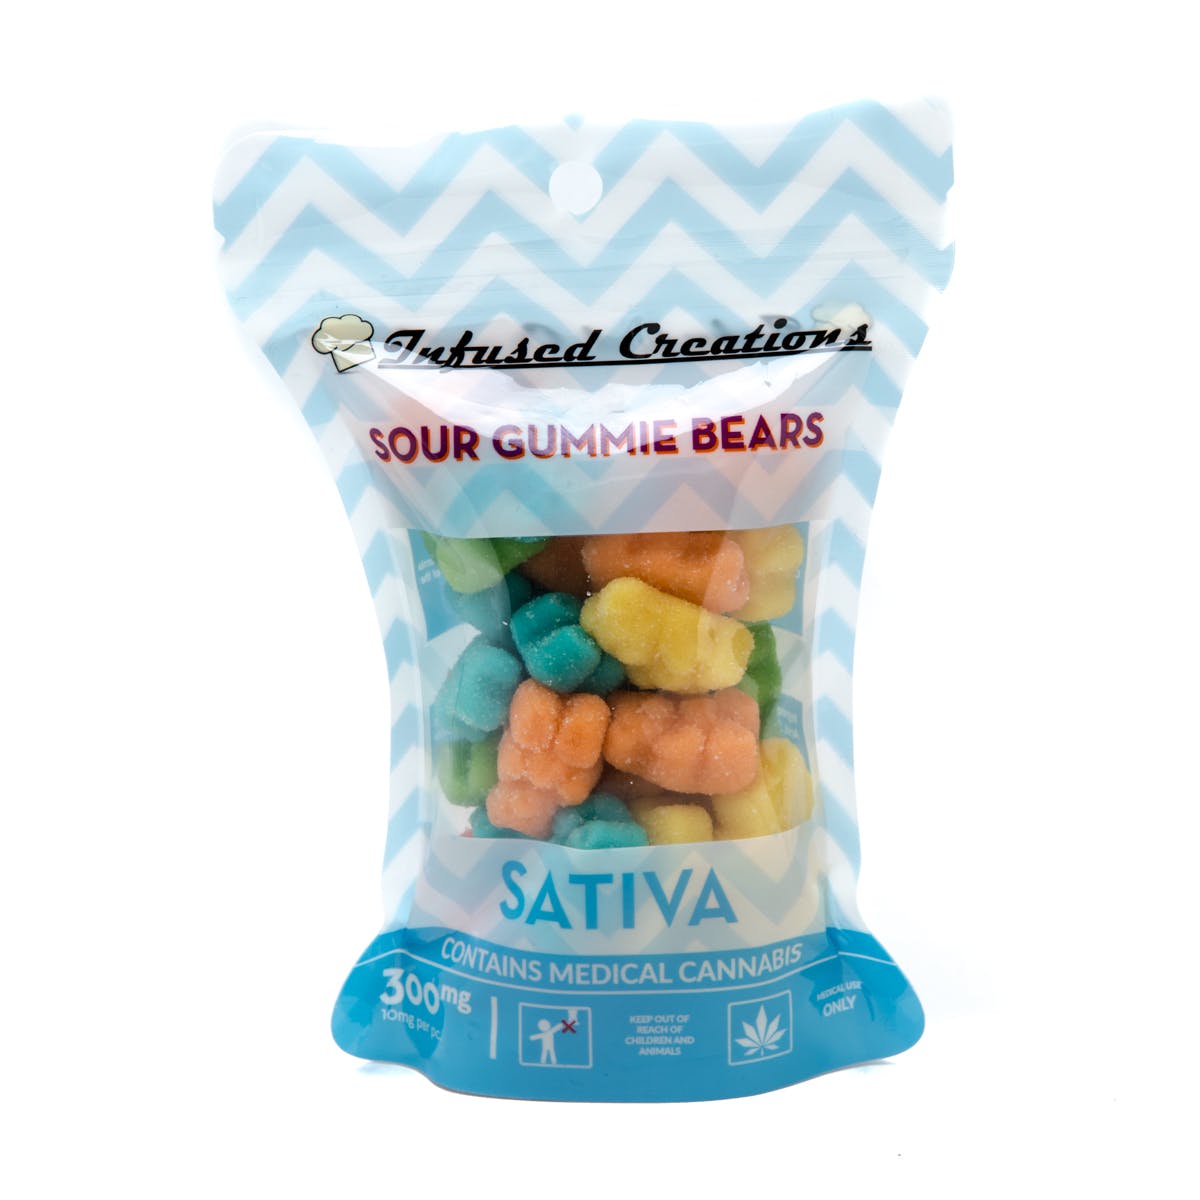 Sour Gummi Bears Sativa, 300mg